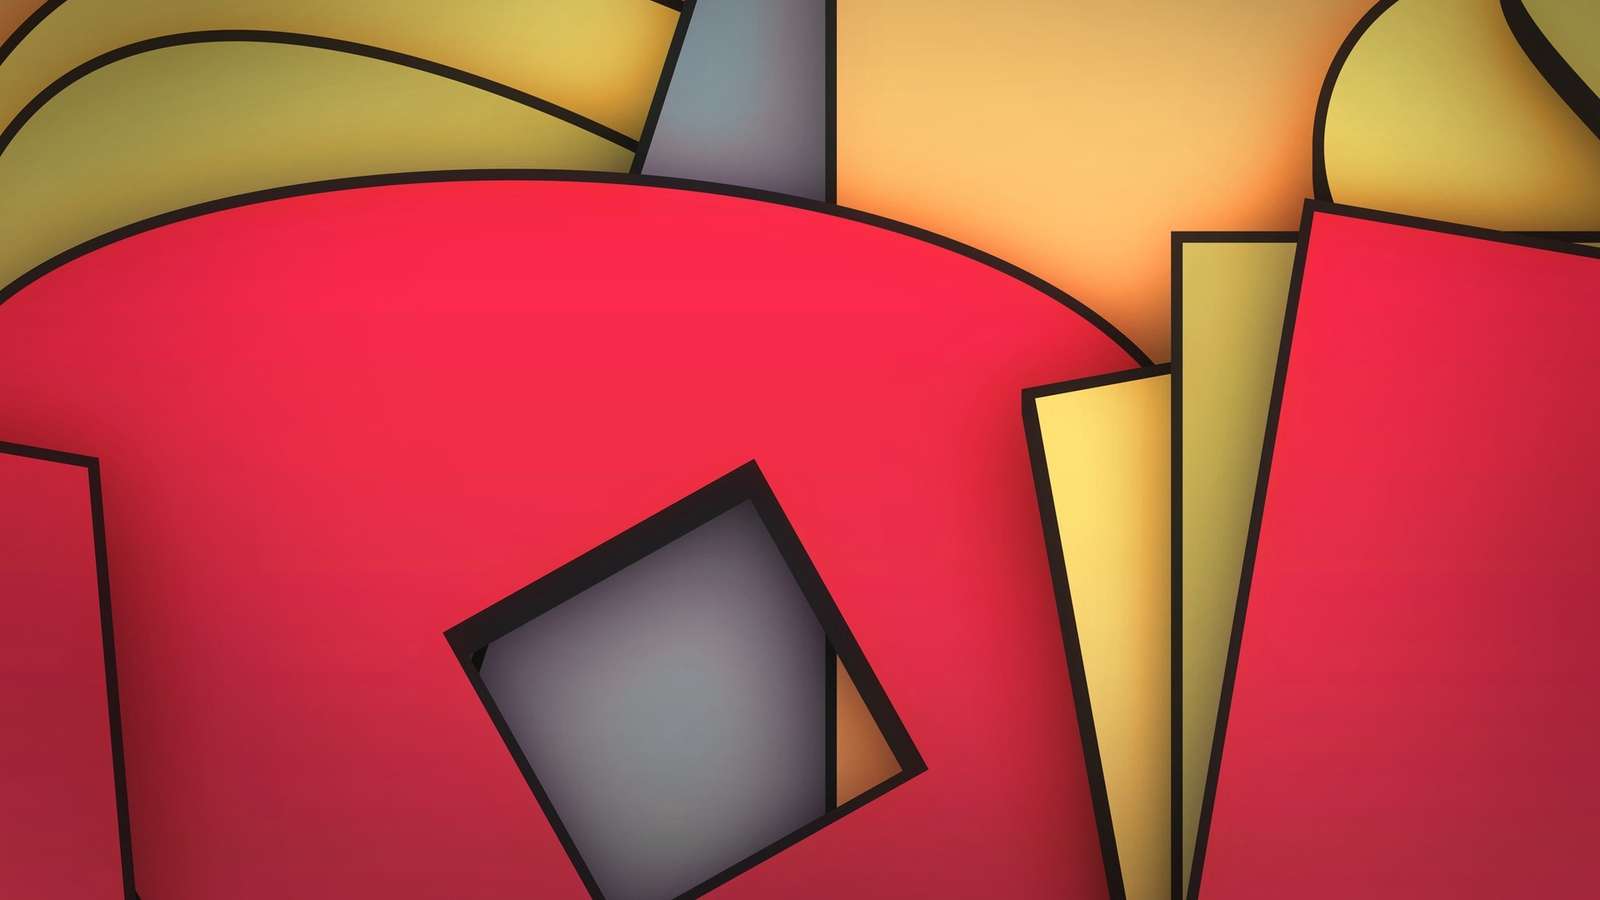 Quebra-cabeça colorido puzzle online